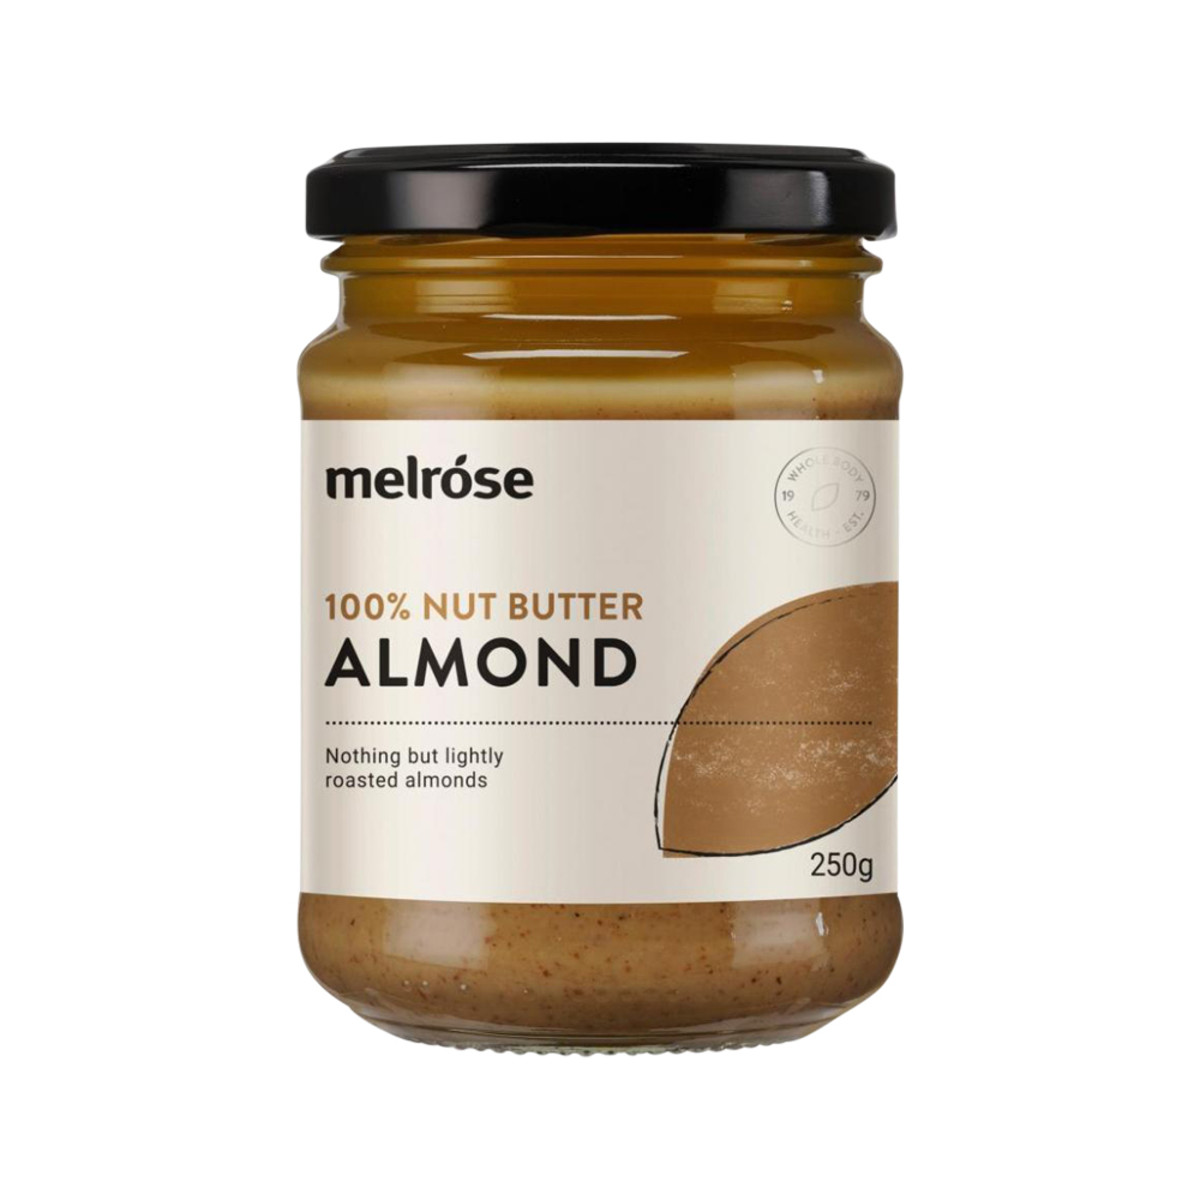 MELROSE - 100% Nut Butter Almond